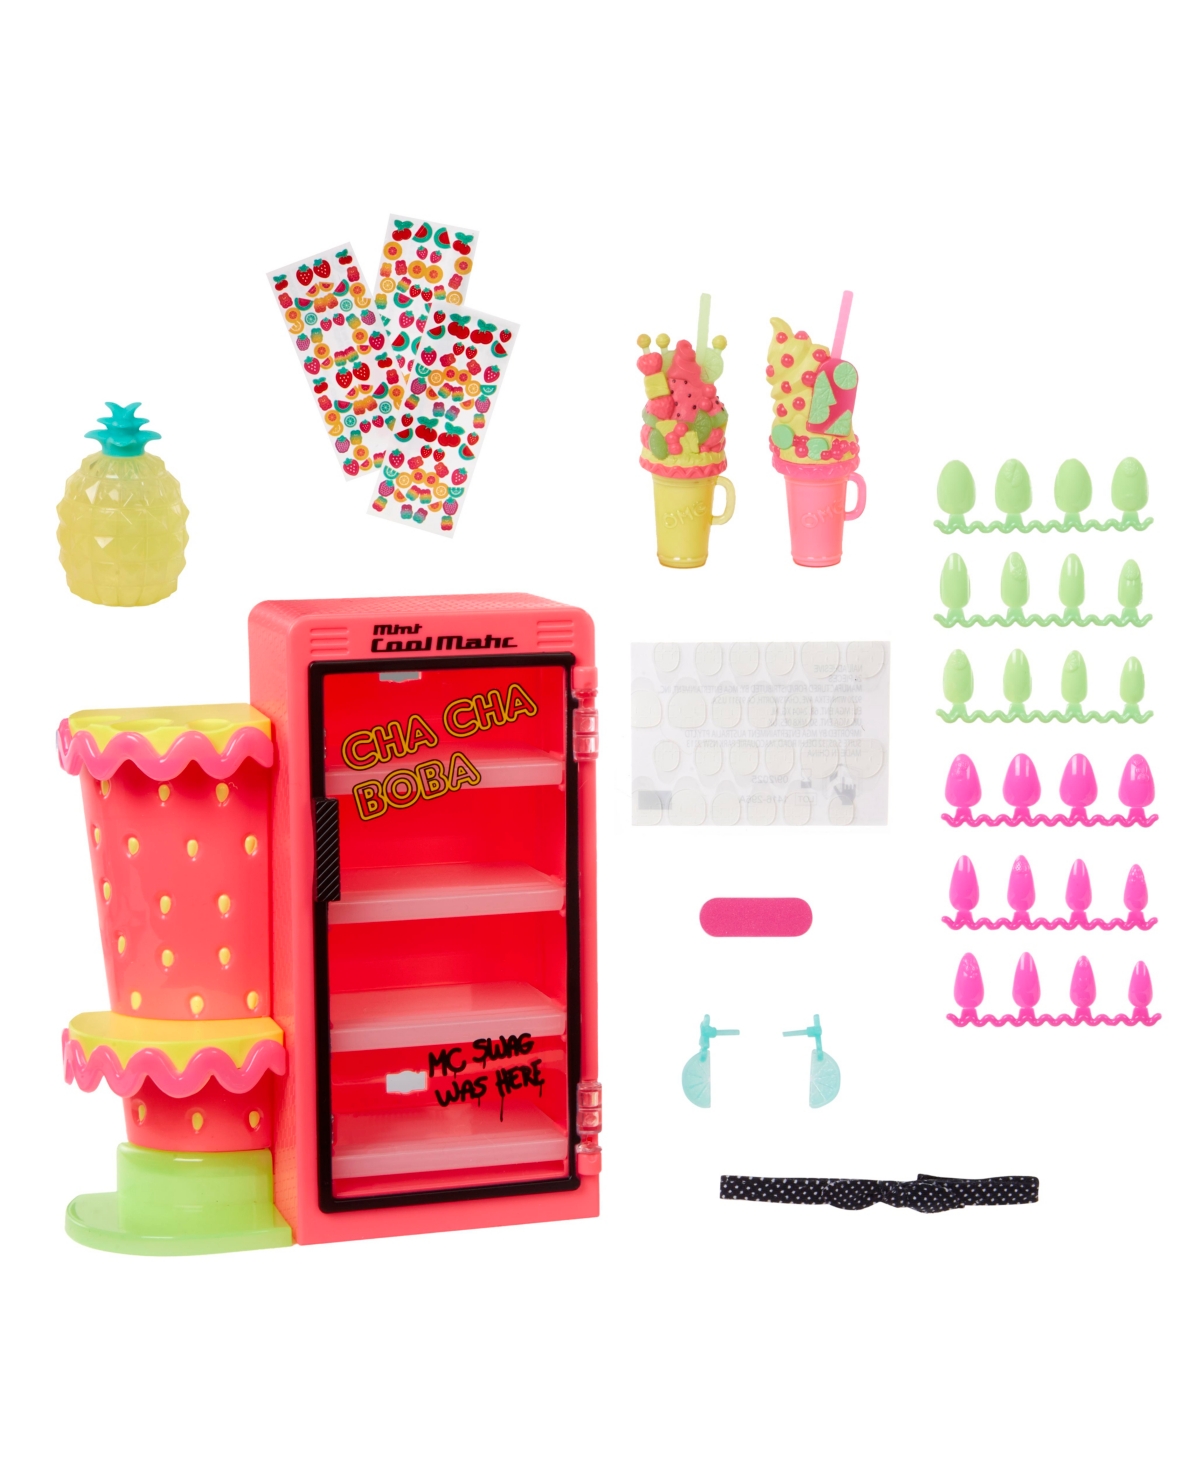 Shop Lol Surprise Omg Sweet Nails Pinky Pops Fruit Shop In Multicolor